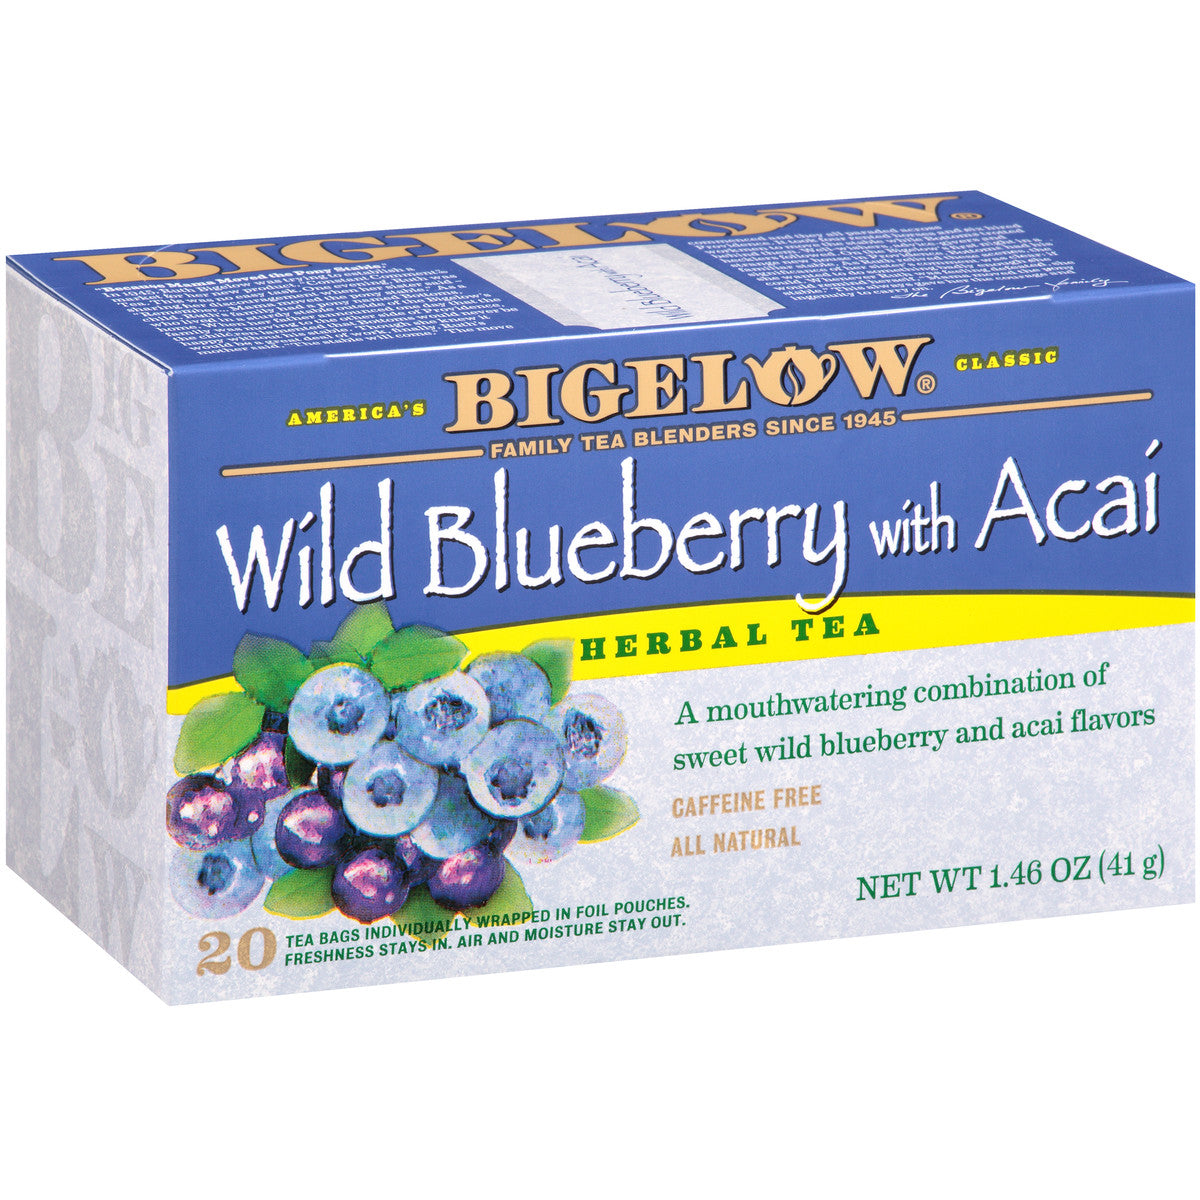 BIGELOW: Wild Blueberry with Acai Herbal Tea 20 Bags, 1.46 oz